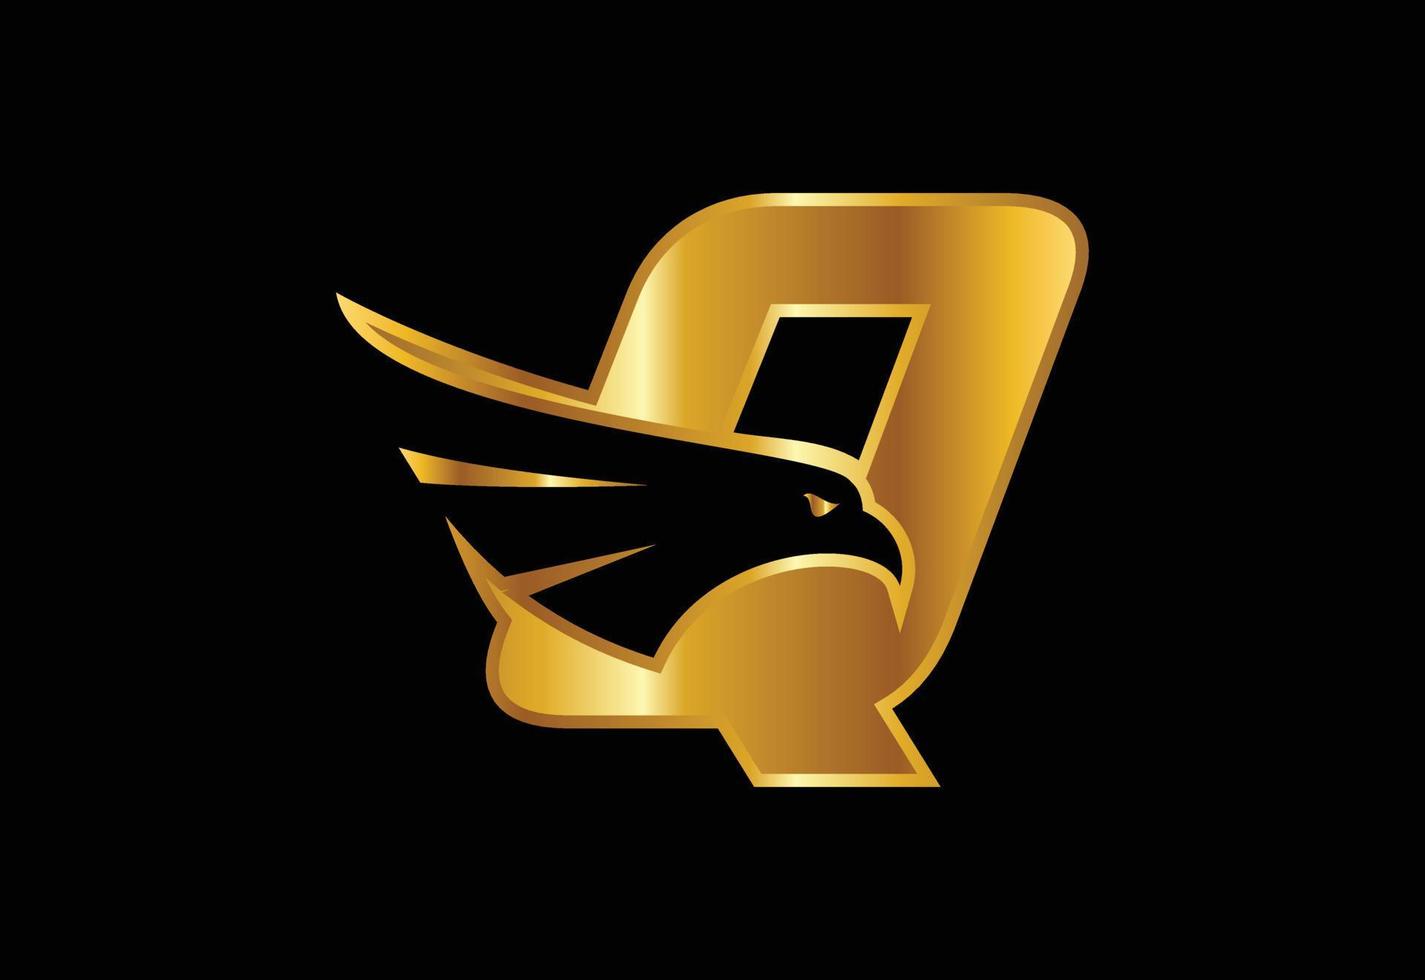 Initial Q monogram letter with Eagle head negative space symbol. Creative Eagle head vector design